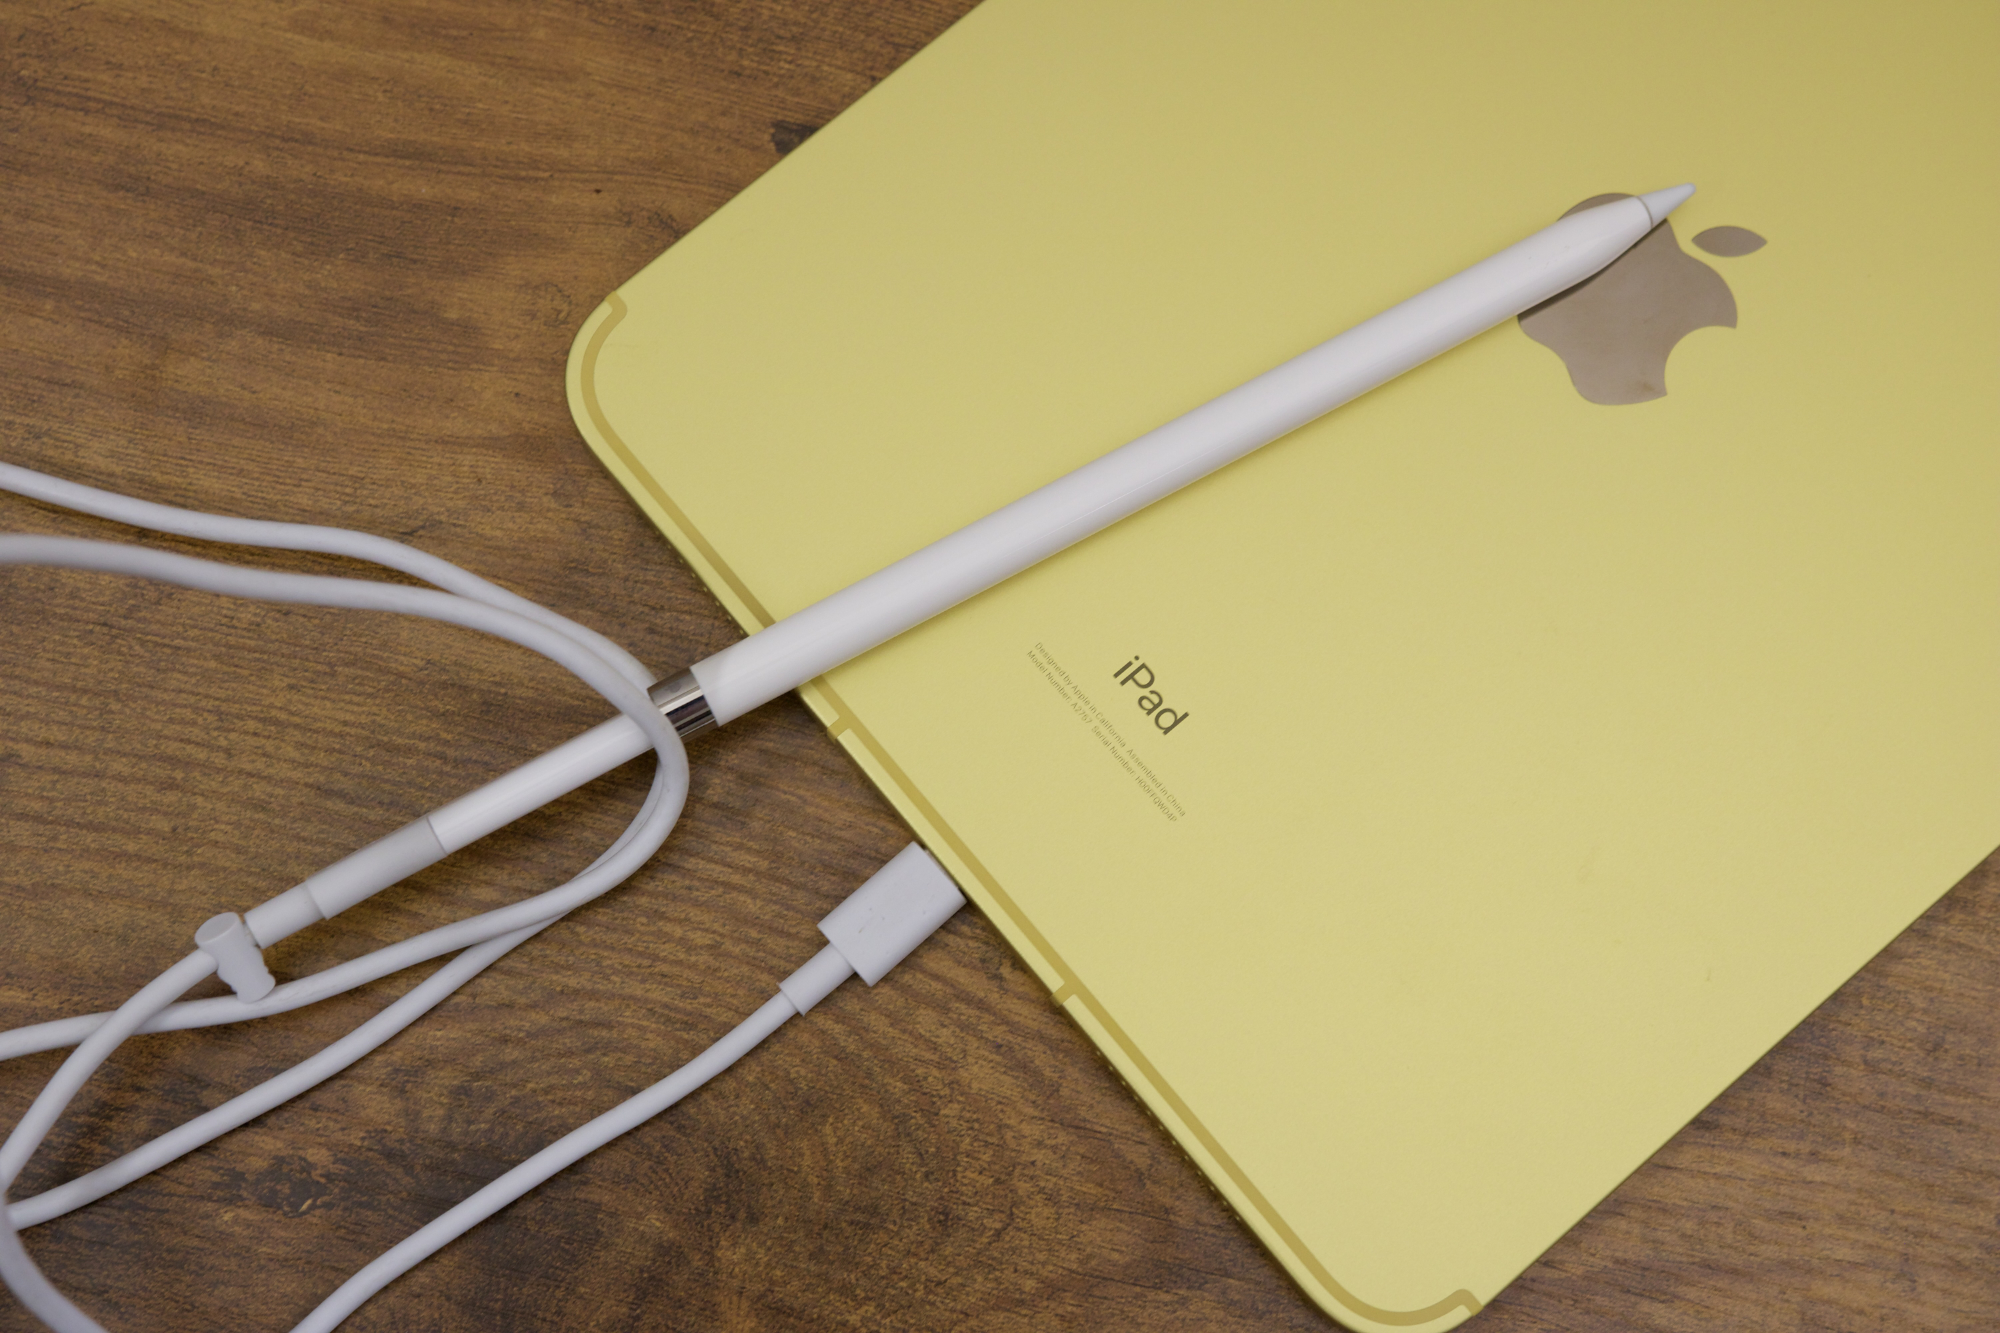 Câbles Apple iPad 10 2022